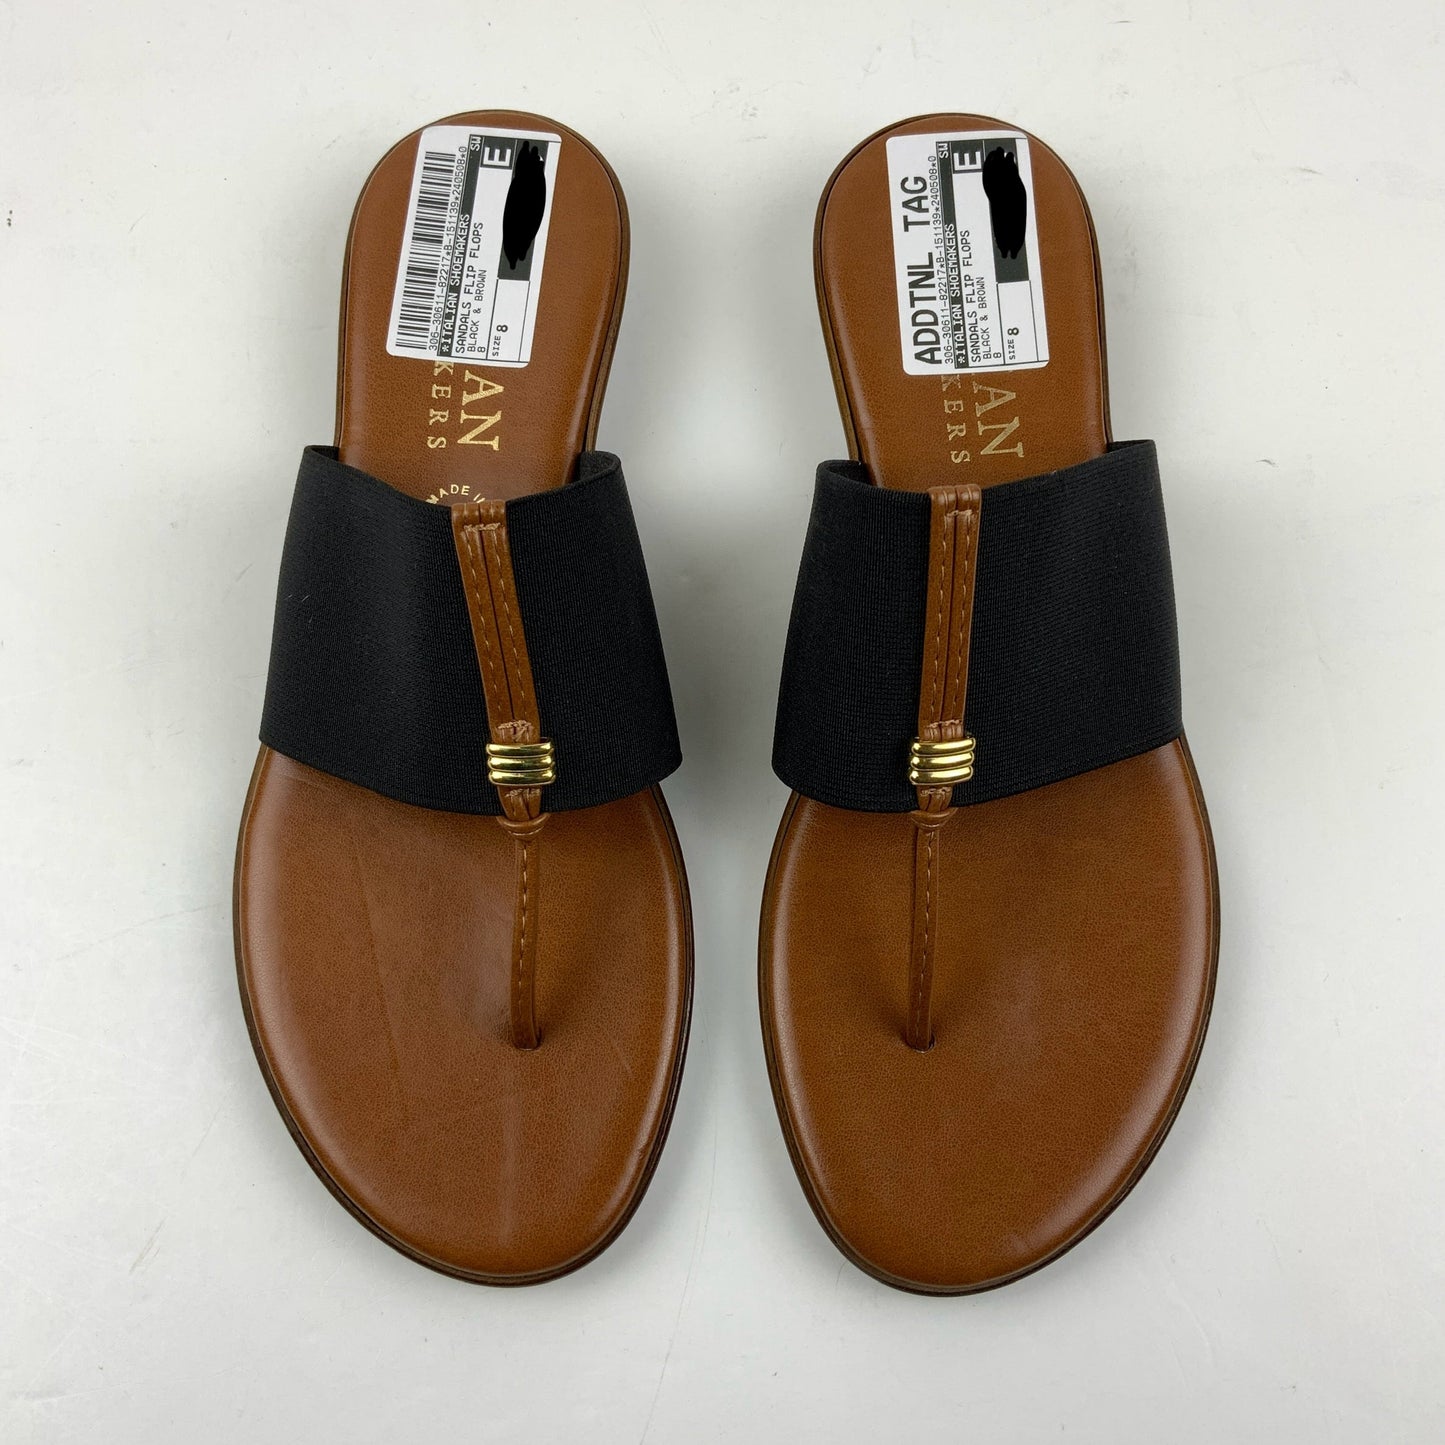 Black & Brown Sandals Flip Flops Italian Shoemakers, Size 8